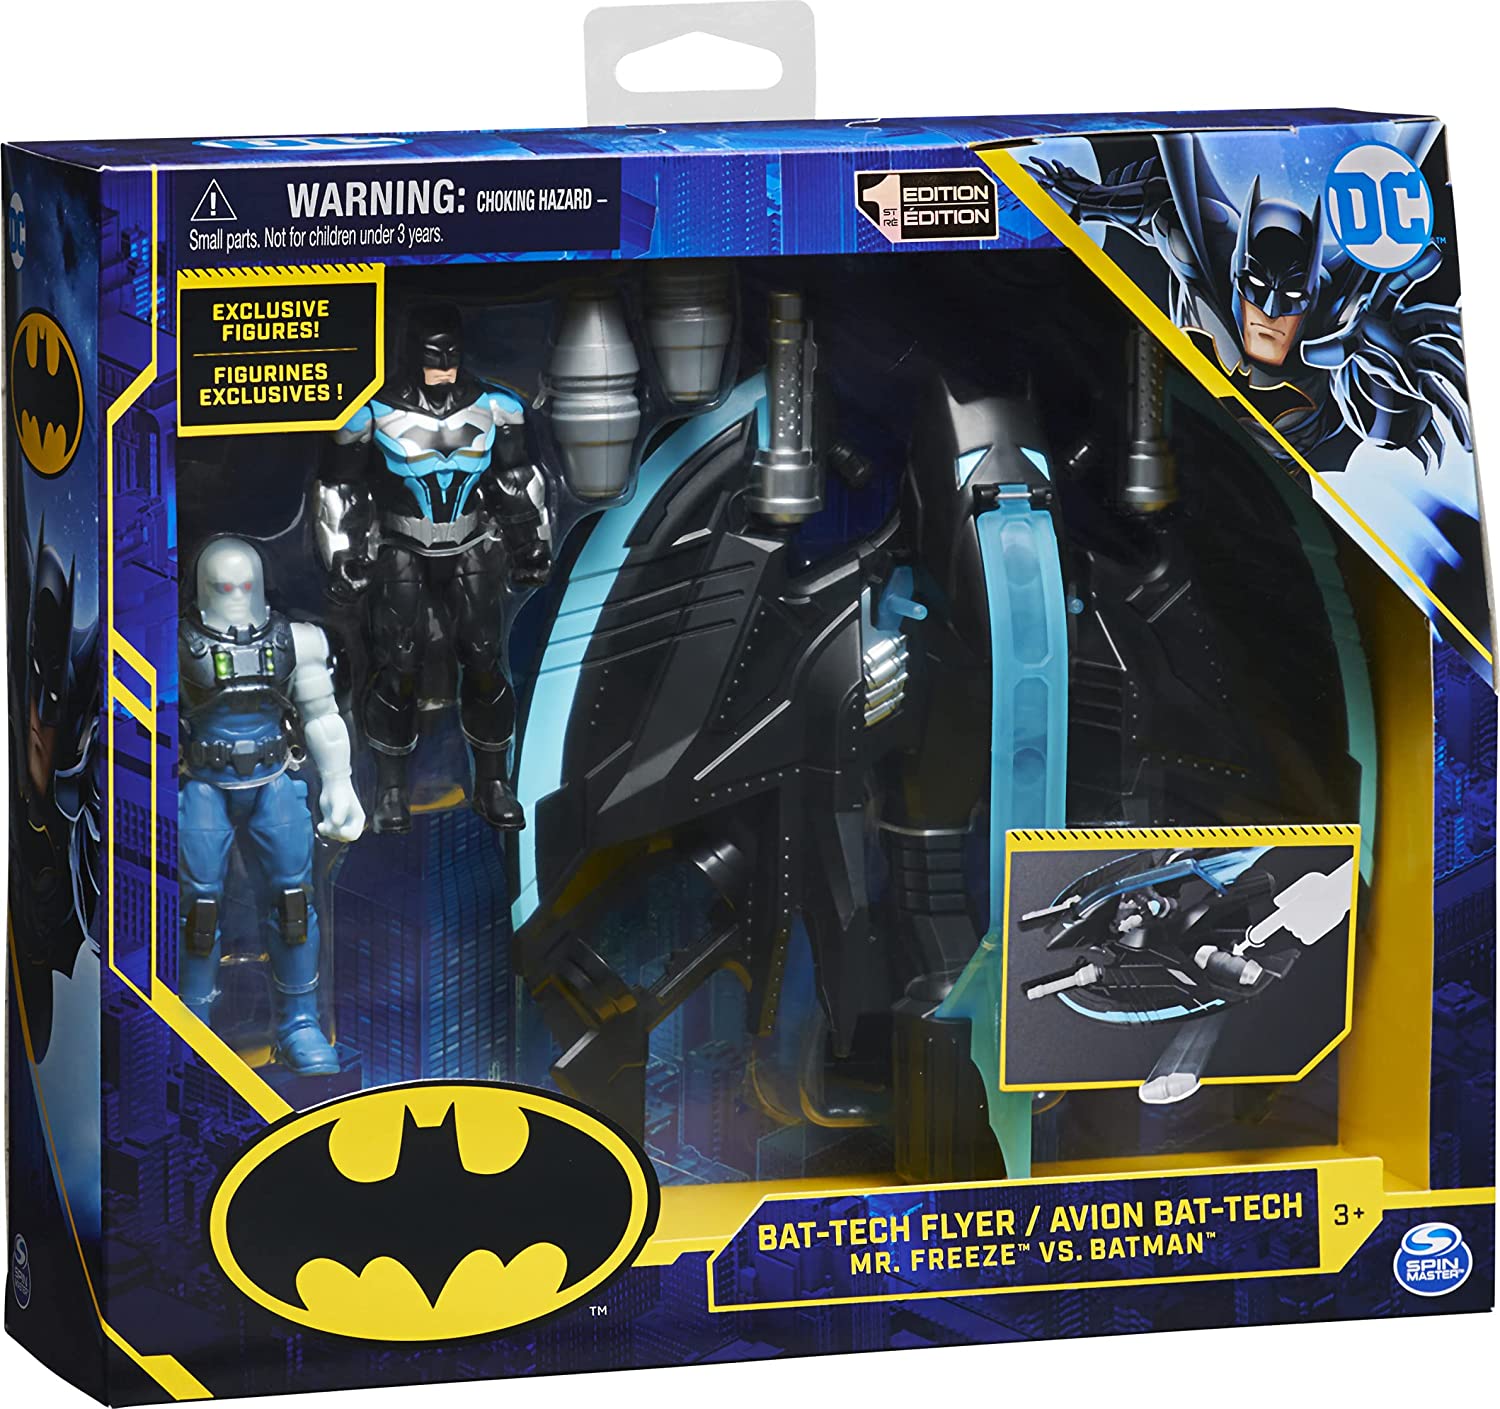 Batman Bat-Tech Flyer